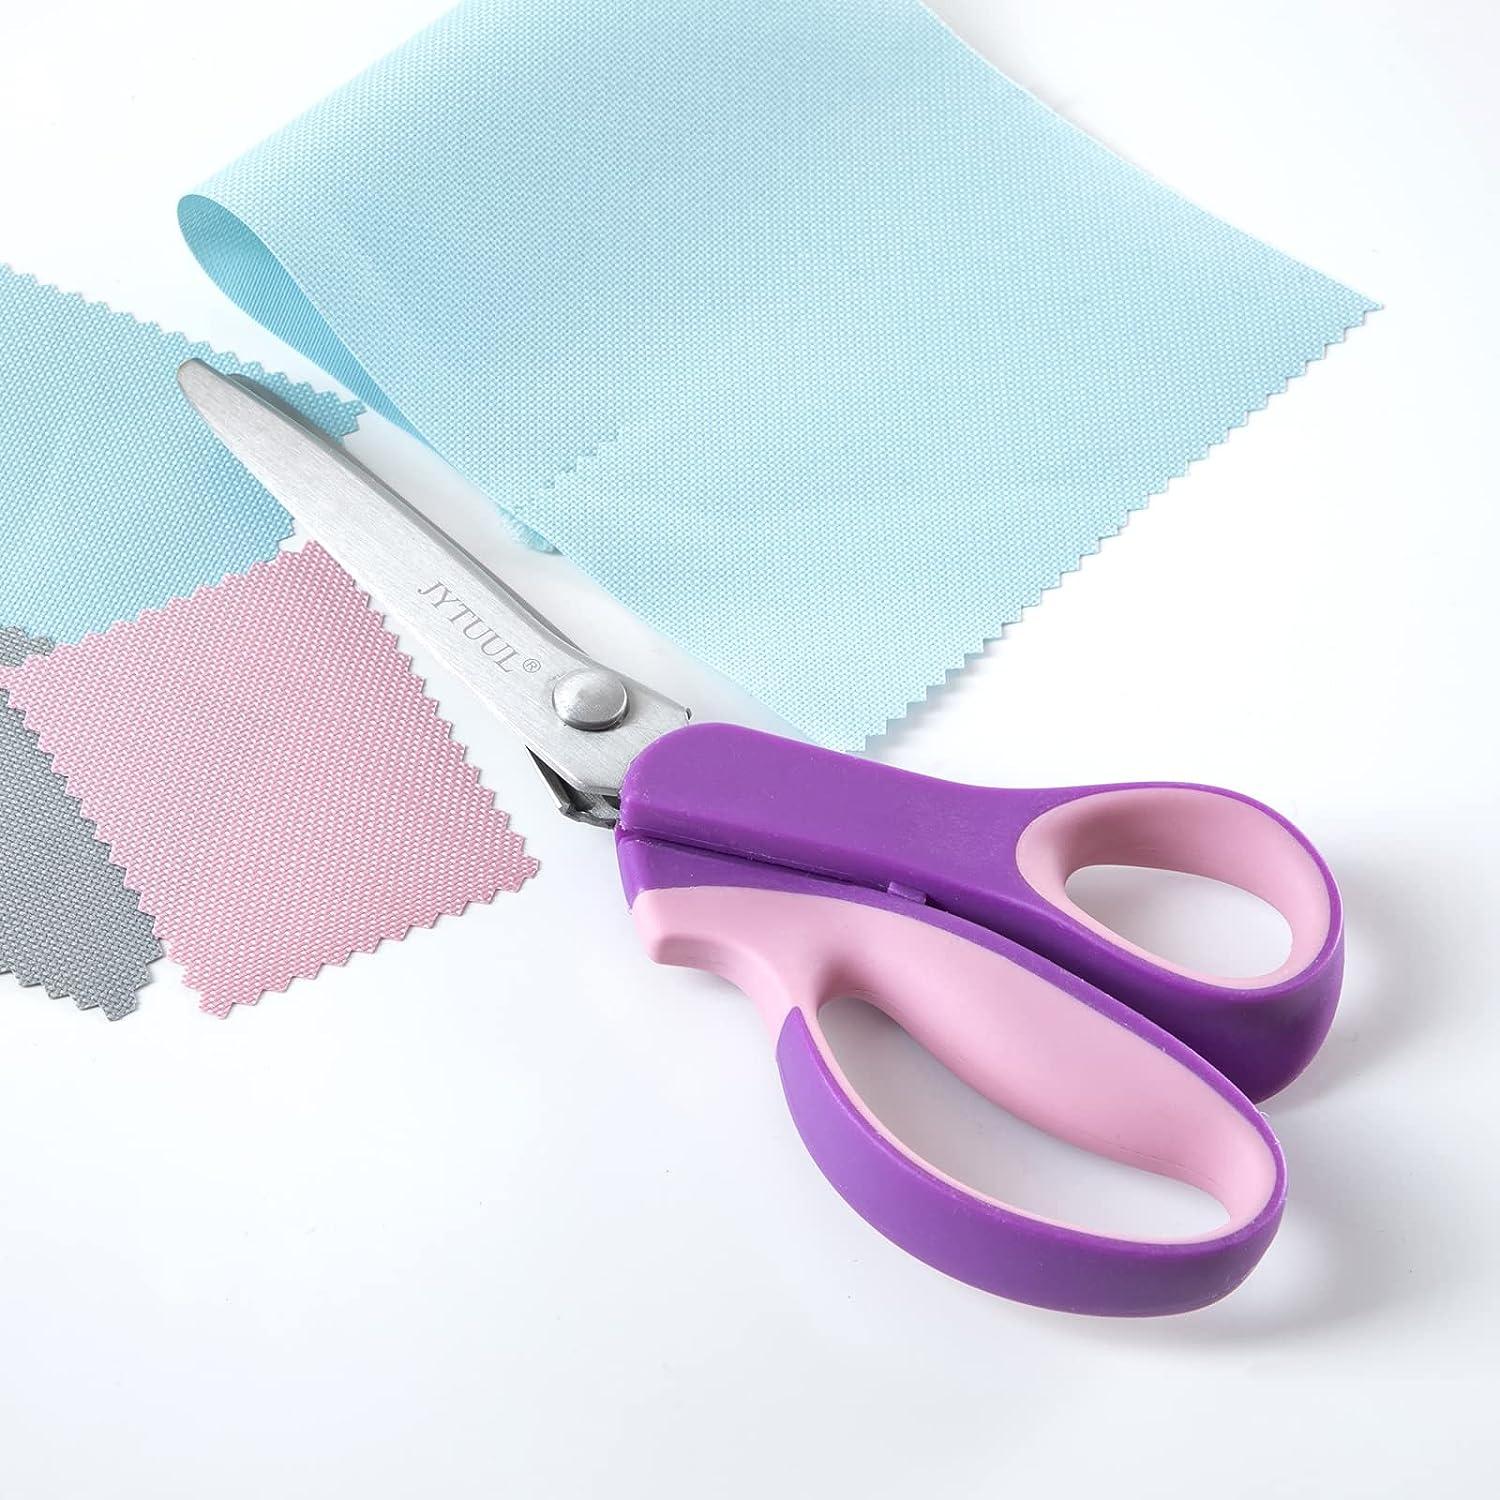 JubileeYarn Sewing Scissors Set - Pinking, Embroidery, & Fabric Shears